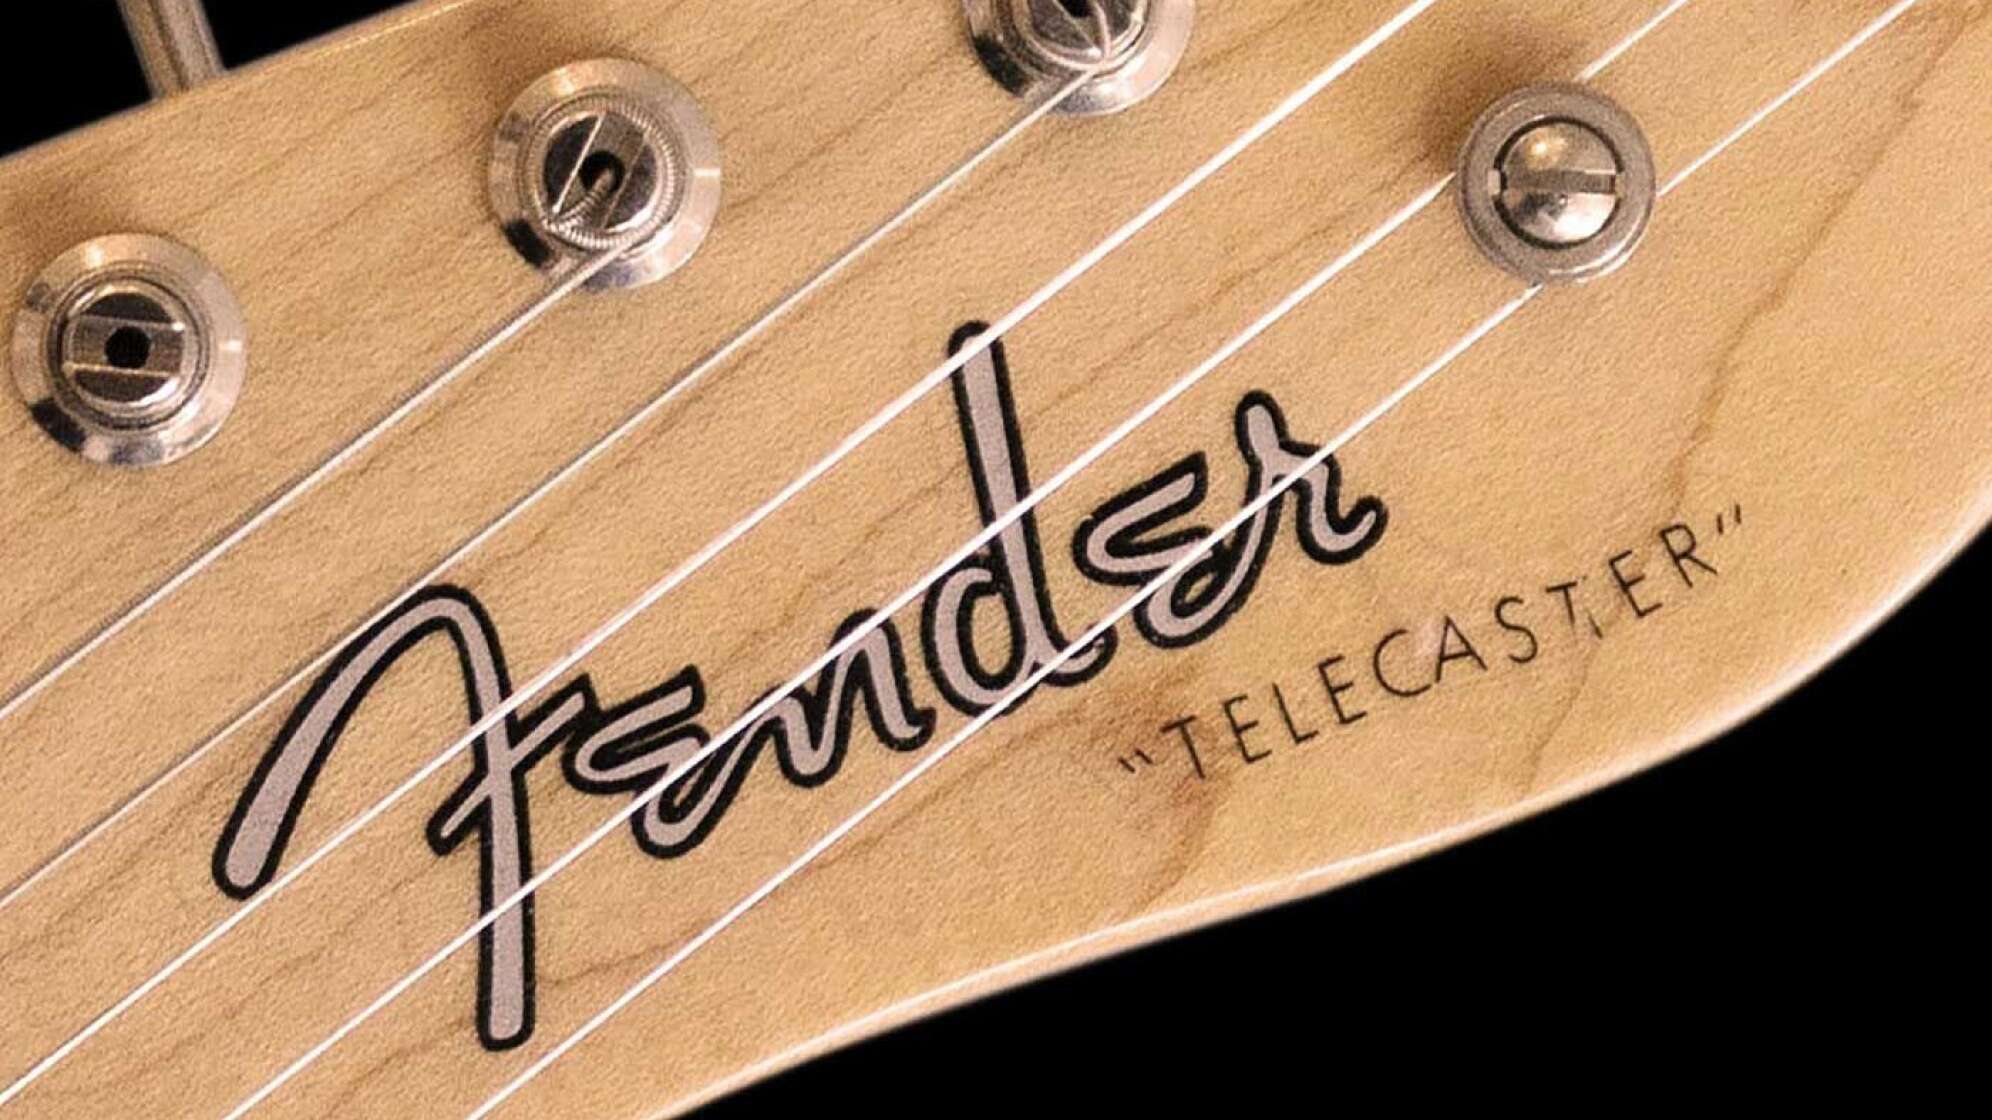 Fender-Gitarre Nahaufnahme